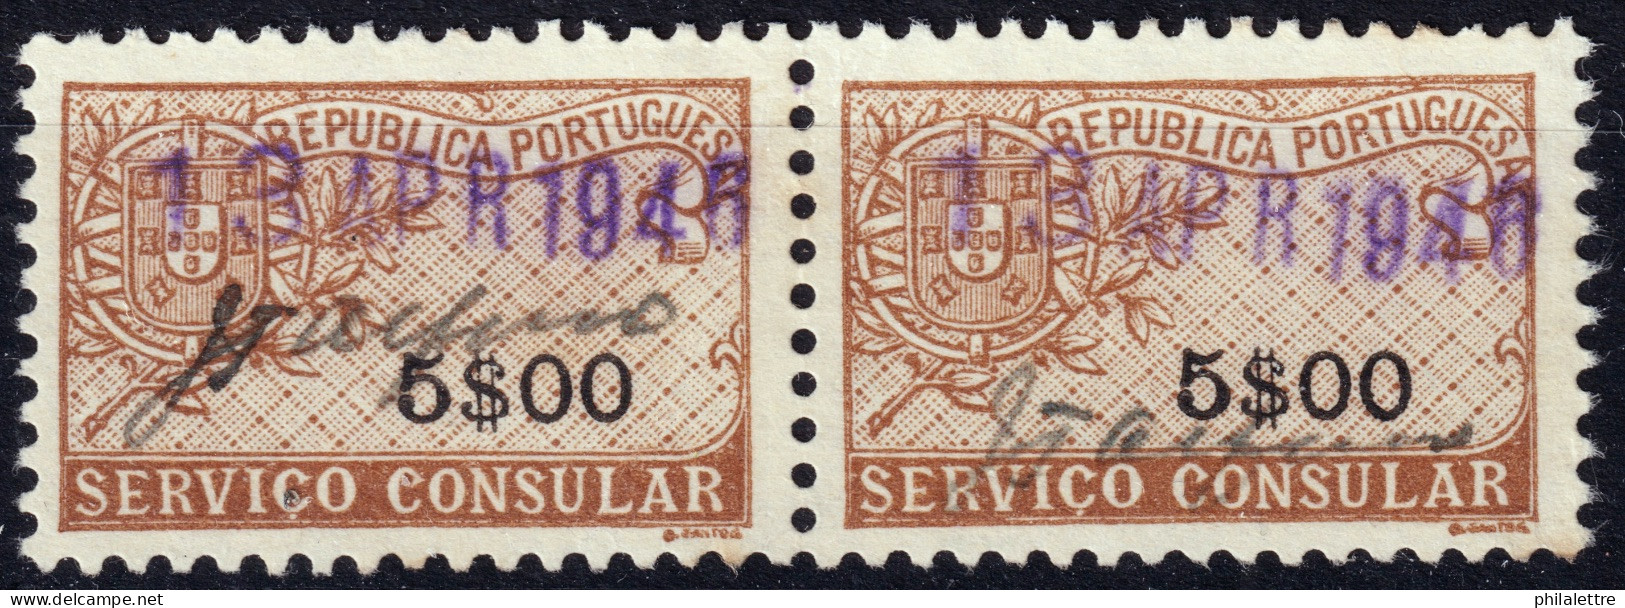 PORTUGAL - 1946 Pair Of 5.00esc. "SERVICIO CONSULAR" Fiscal Revenue Stamp - Very Fine Used - Gebraucht